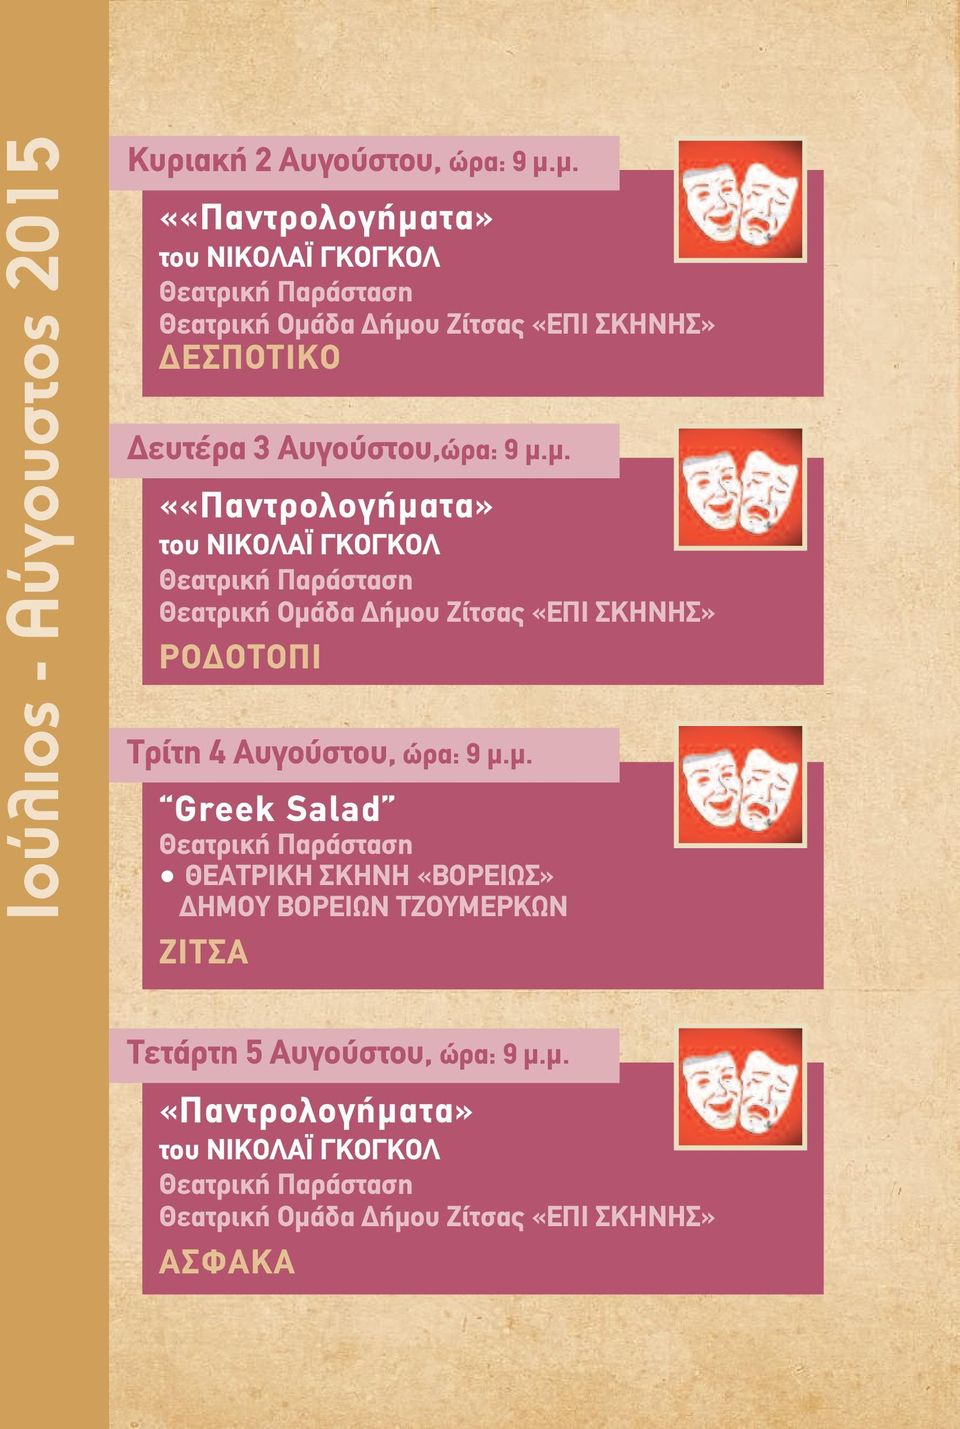 µ. Greek Salad ΘEATPIKH ΣKHNH «BOPEIΩΣ» HMOY BOPEIΩN TZOYMEPKΩN ZITΣA